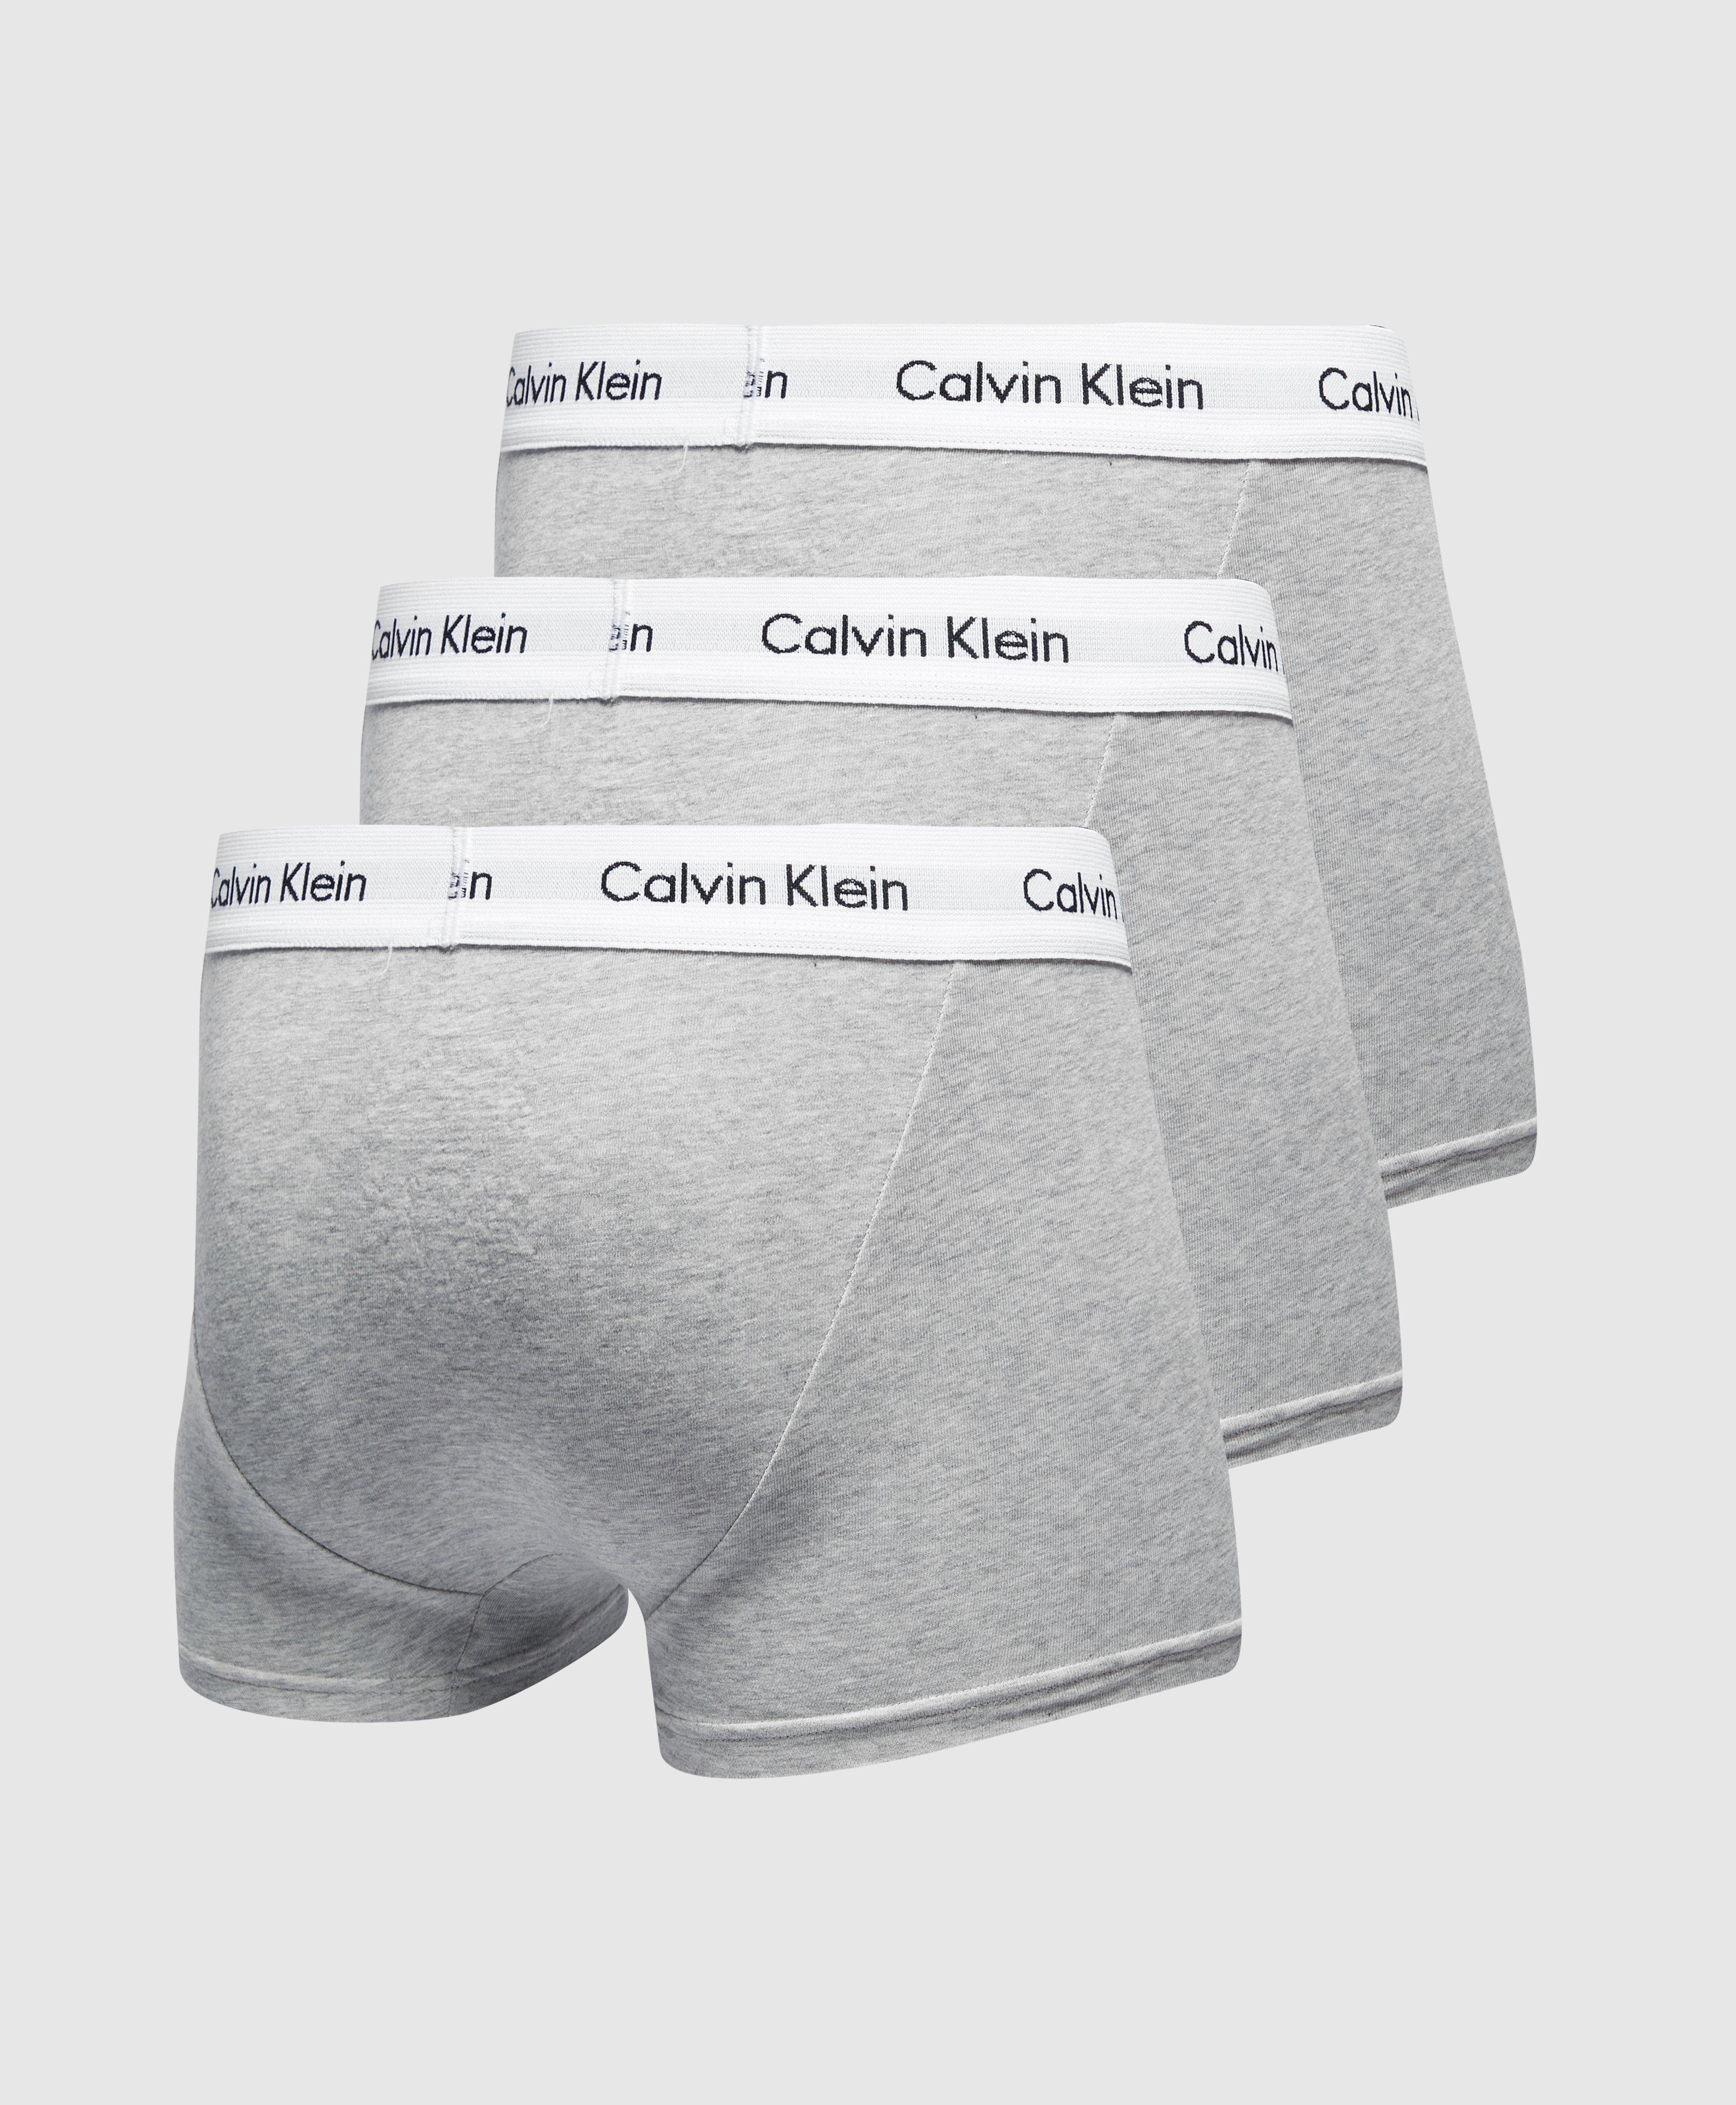 Calvin Klein 3-pack Low Rise Trunks in Grey (Gray) for Men - Lyst